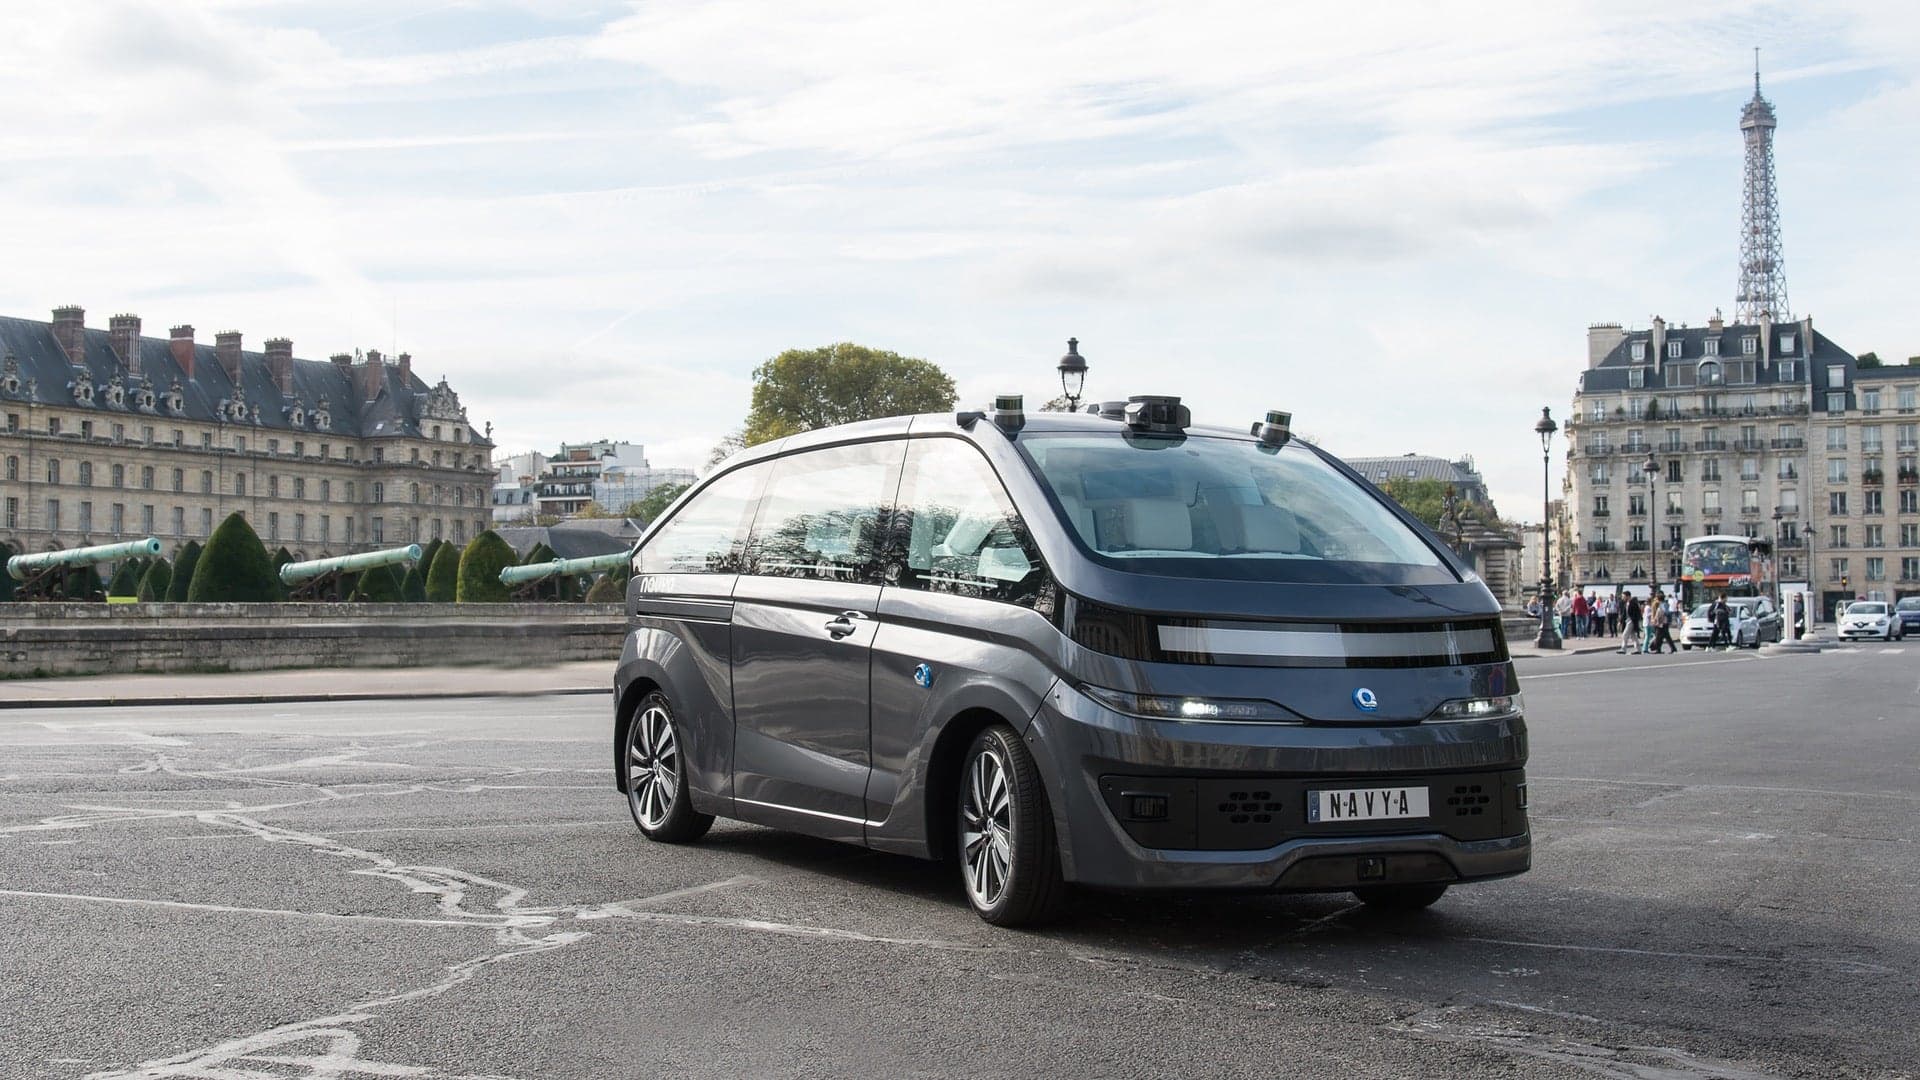 Is Navya’s Autonom Cab the Electric, Autonomous Taxi of the Future?